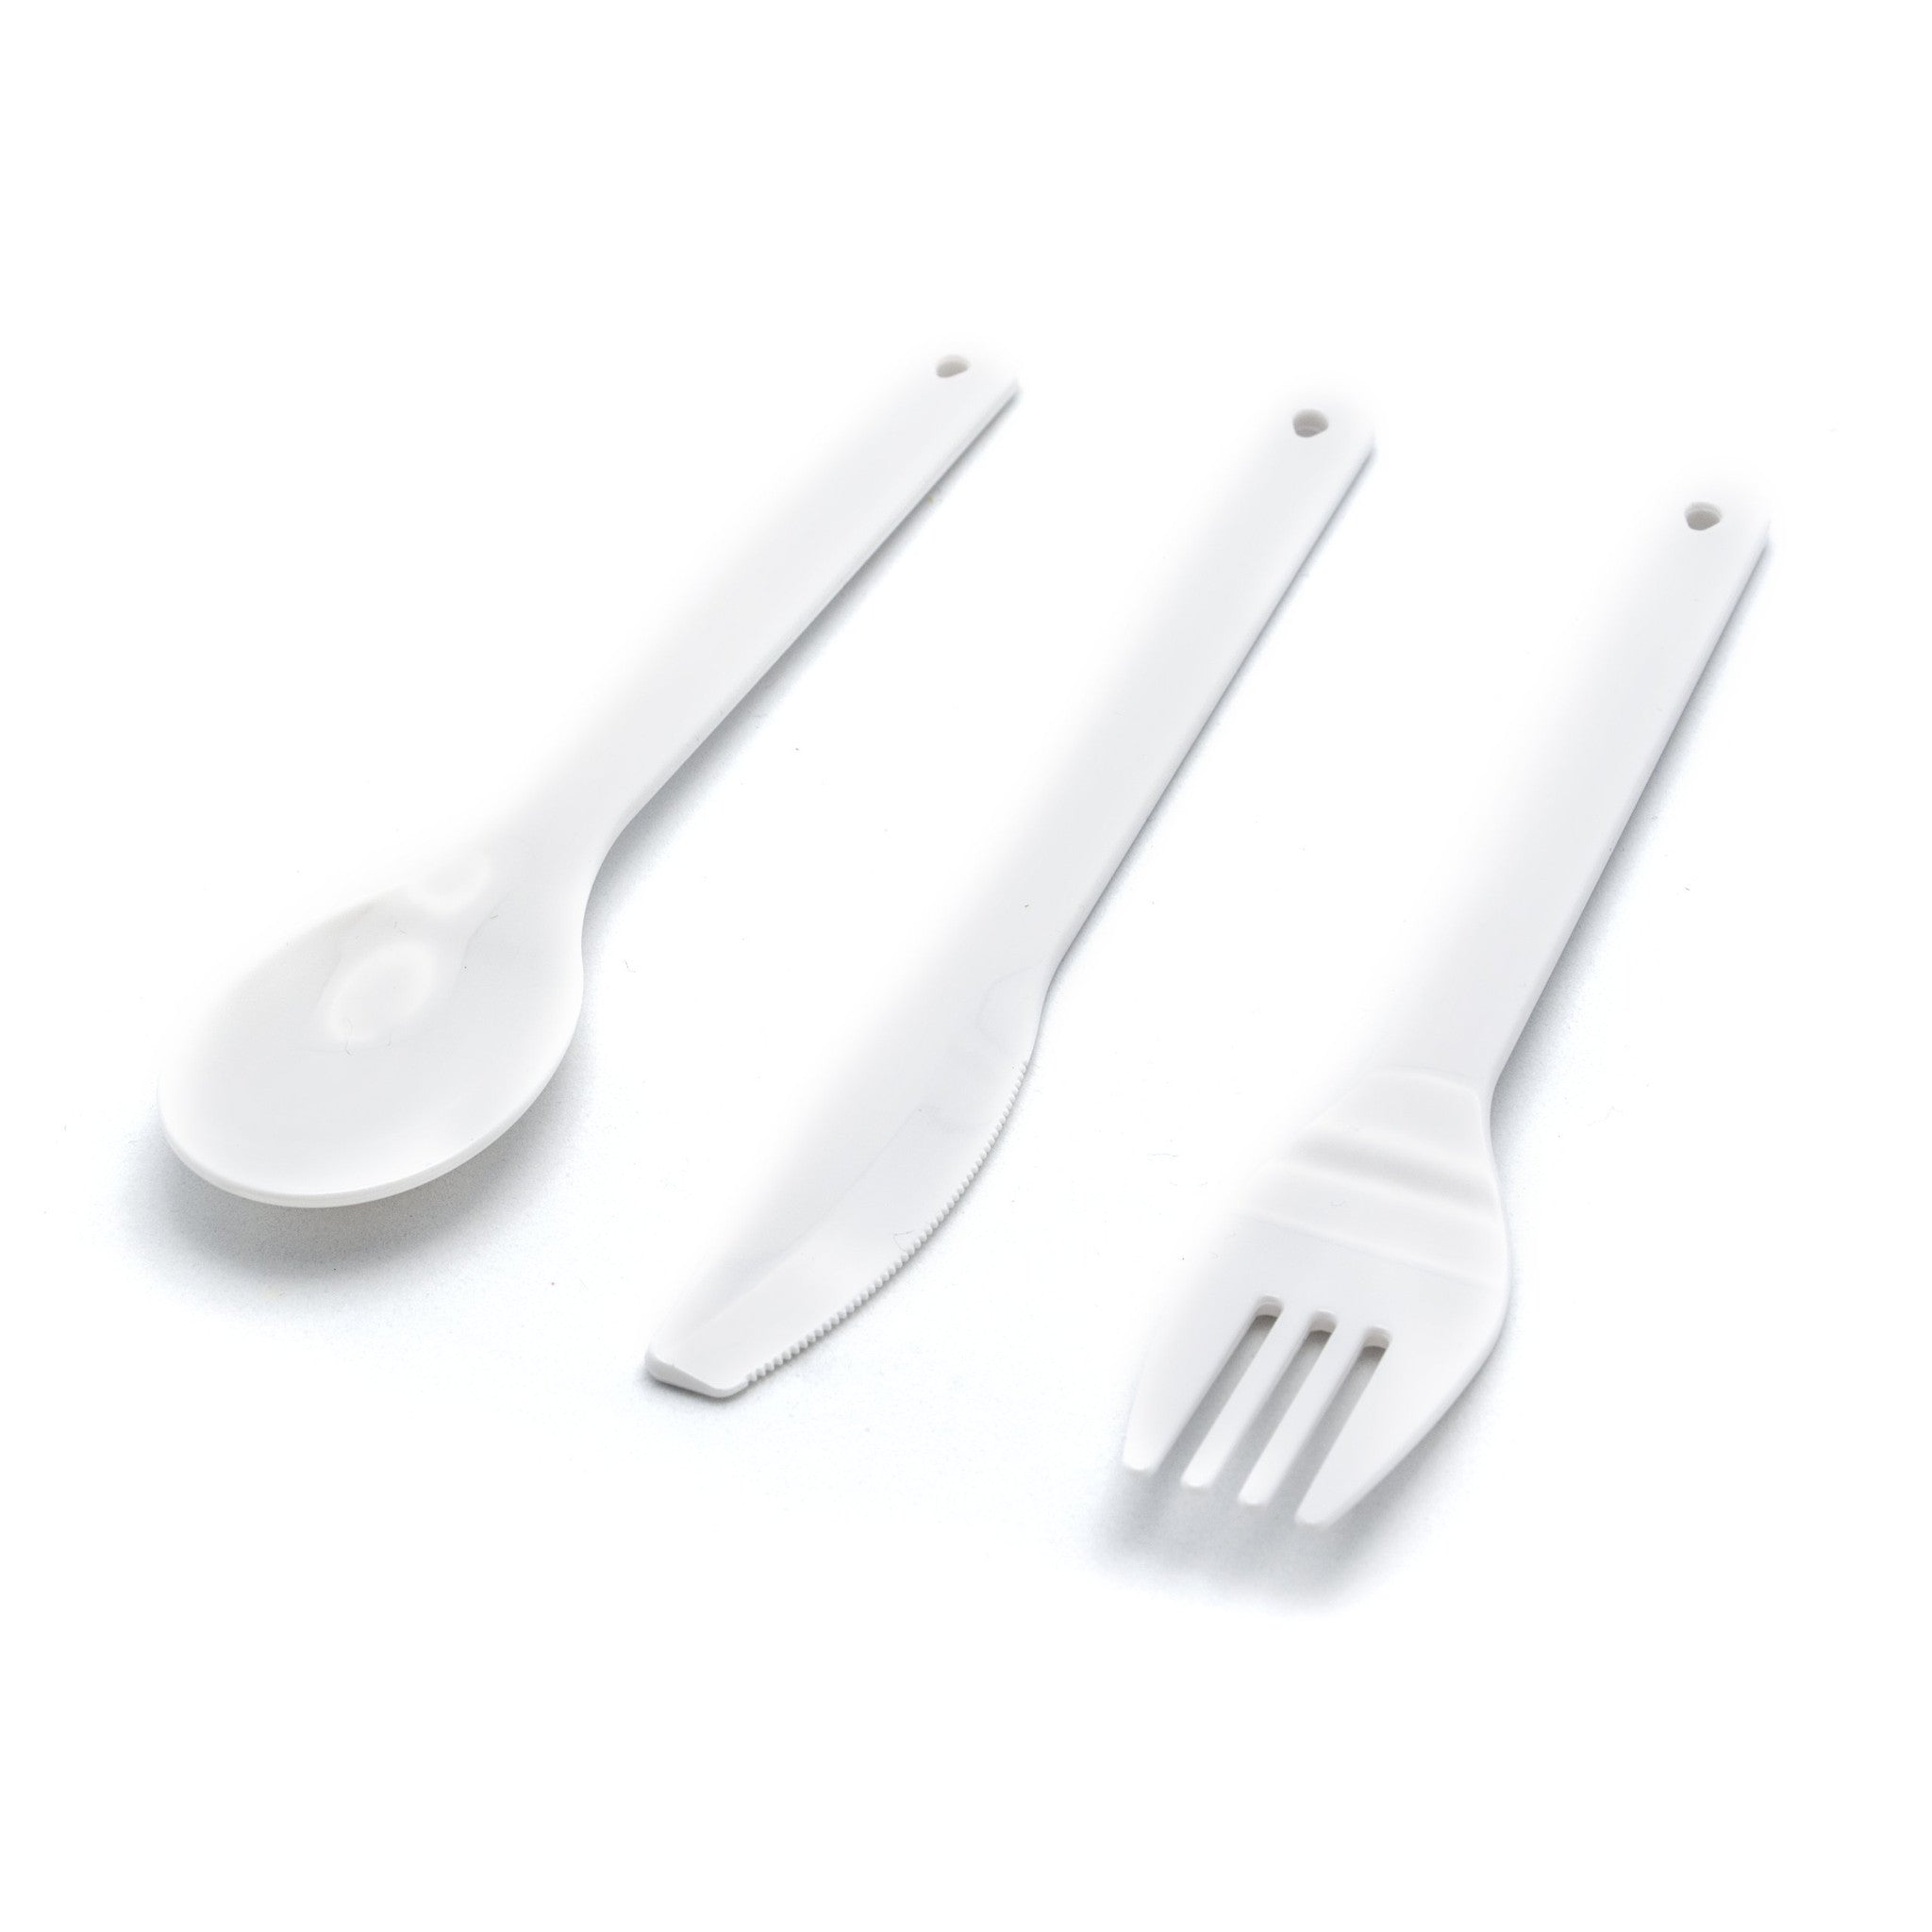 Bentgo® Kids Utensil Set - Reusable Plastic Fork, Spoon & Storage Case -  BPA-Free Materials, Easy-Grip Handles, Dishwasher Safe - Ideal for School